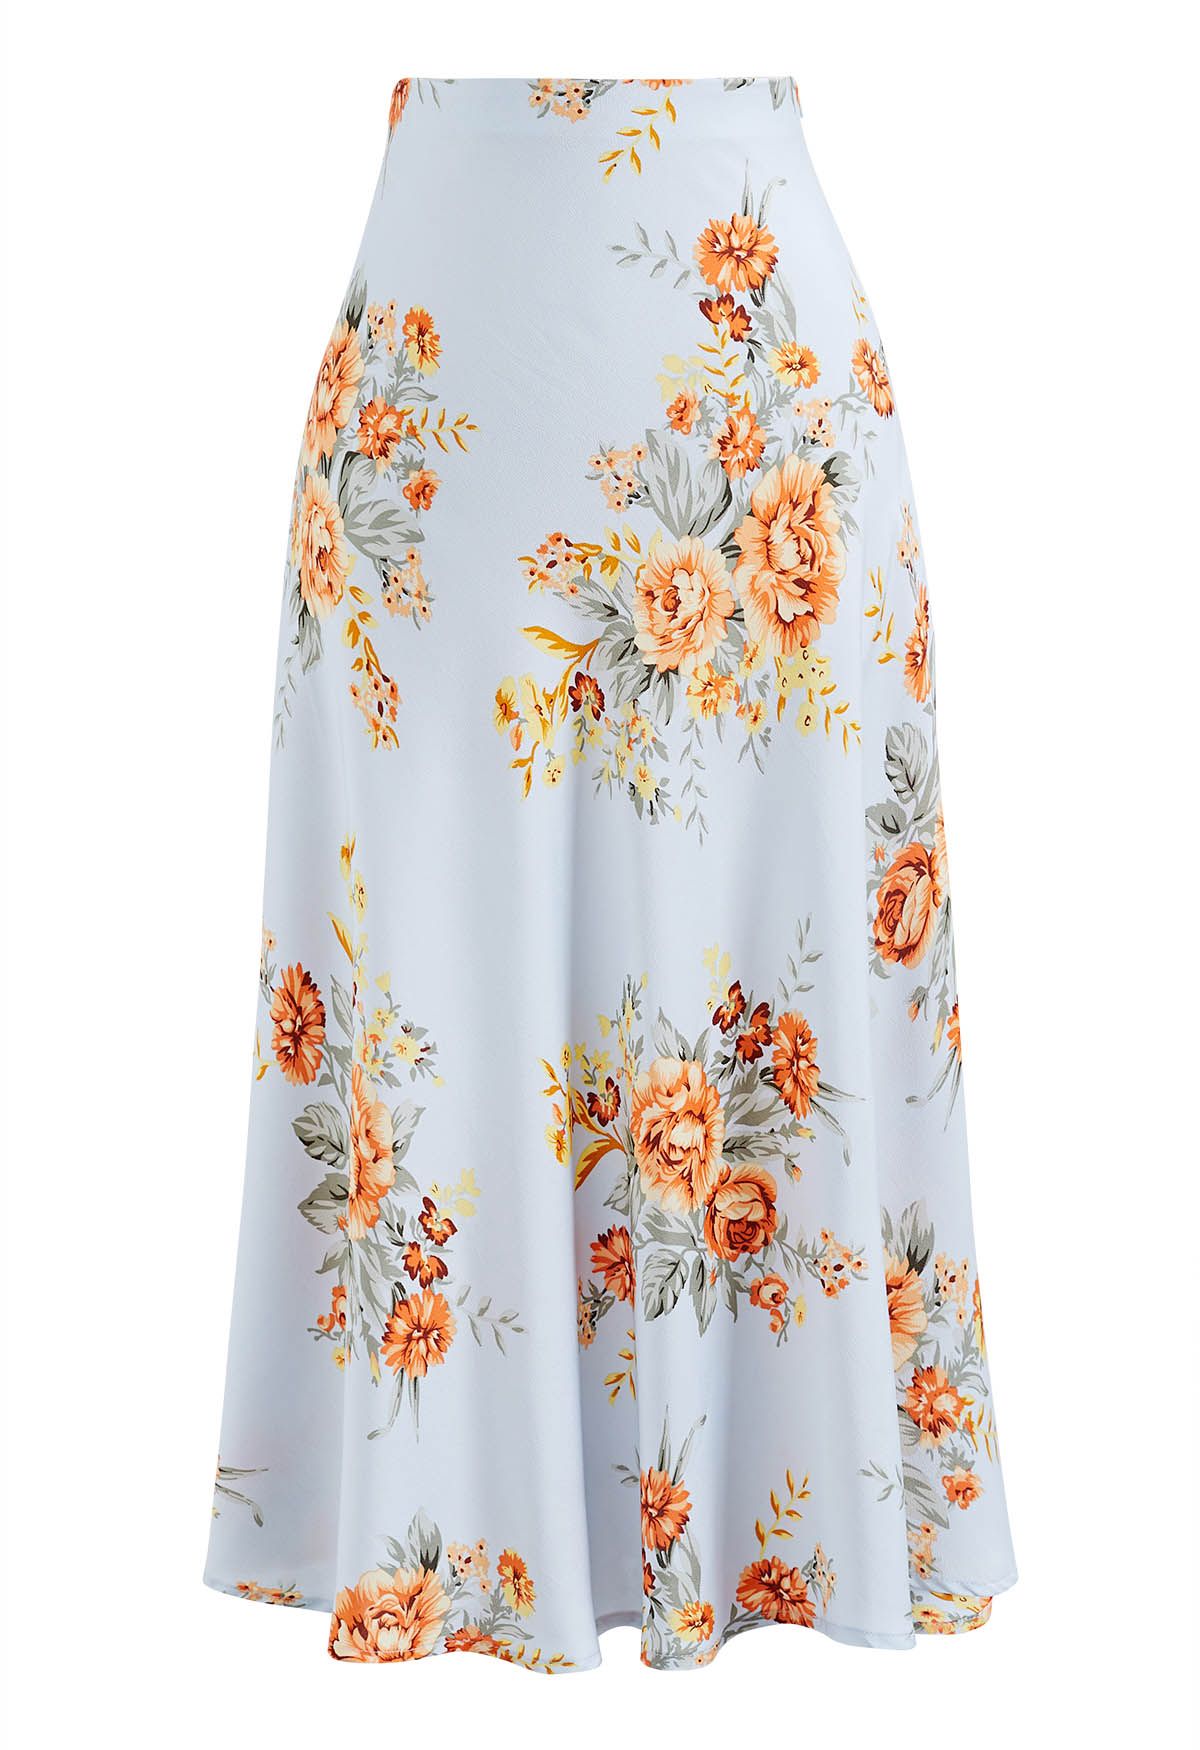 Floral Printed Cami Top and Skirt Set